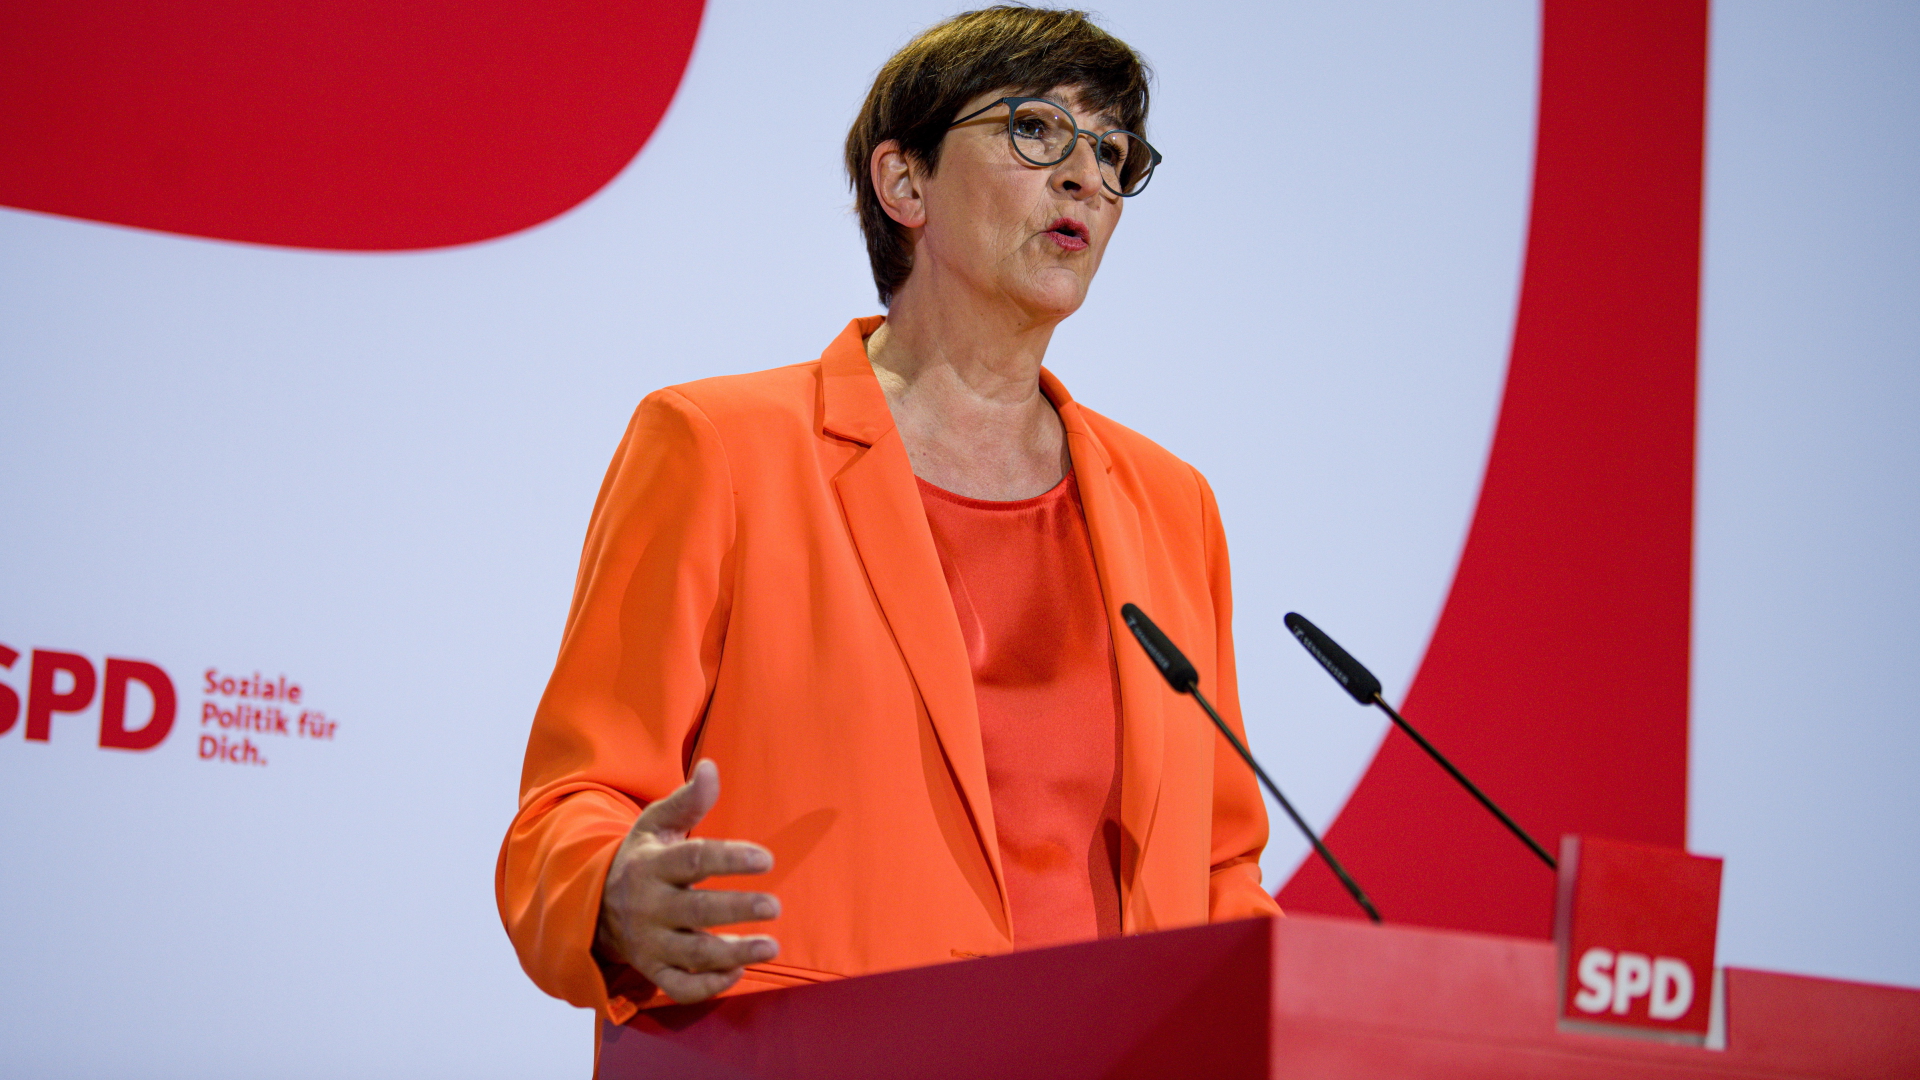 SPD-Chefin Esken bei Bürgergeld kompromissbereit